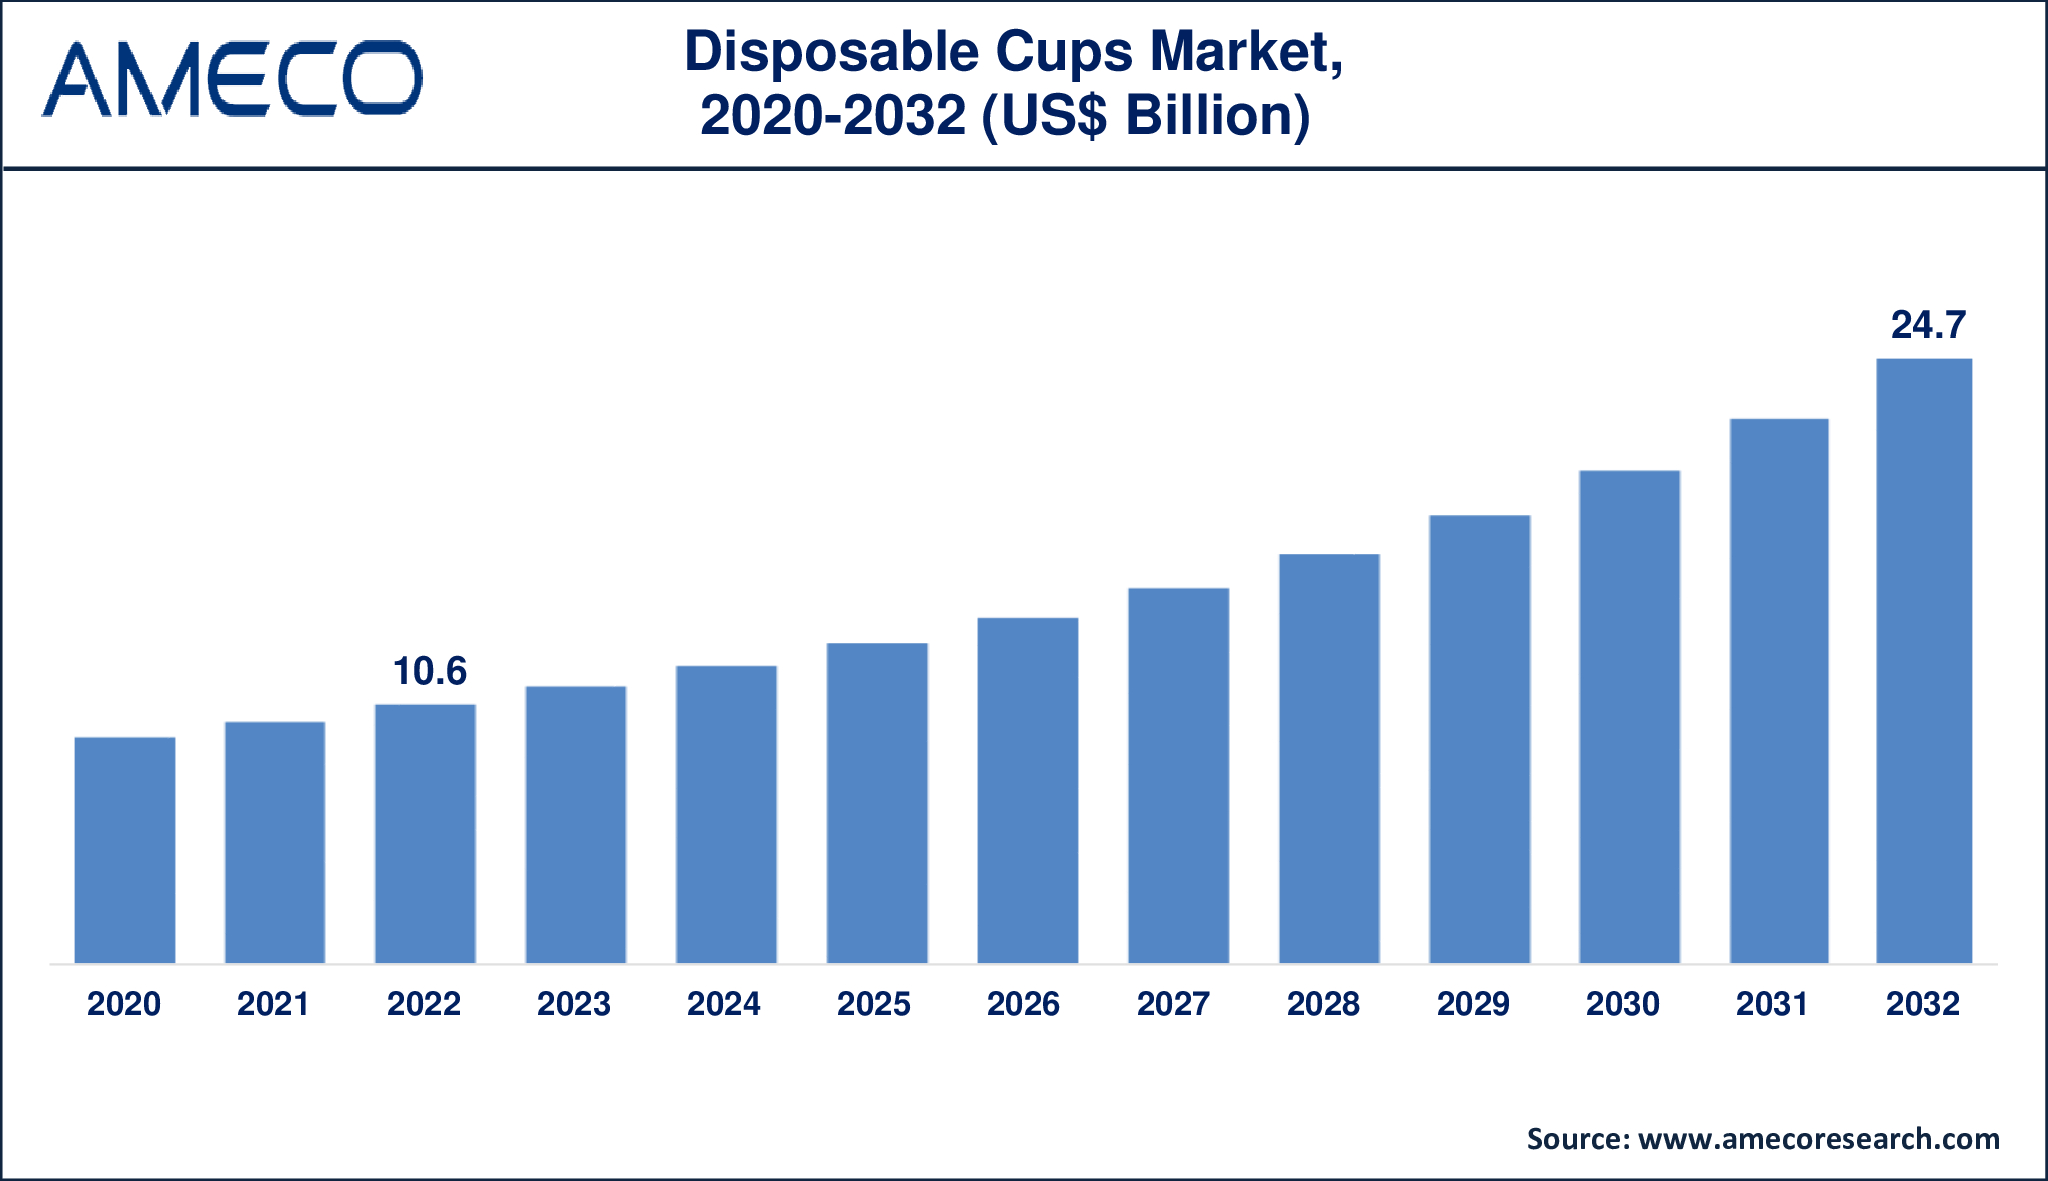 Disposable Cups Market Dynamics